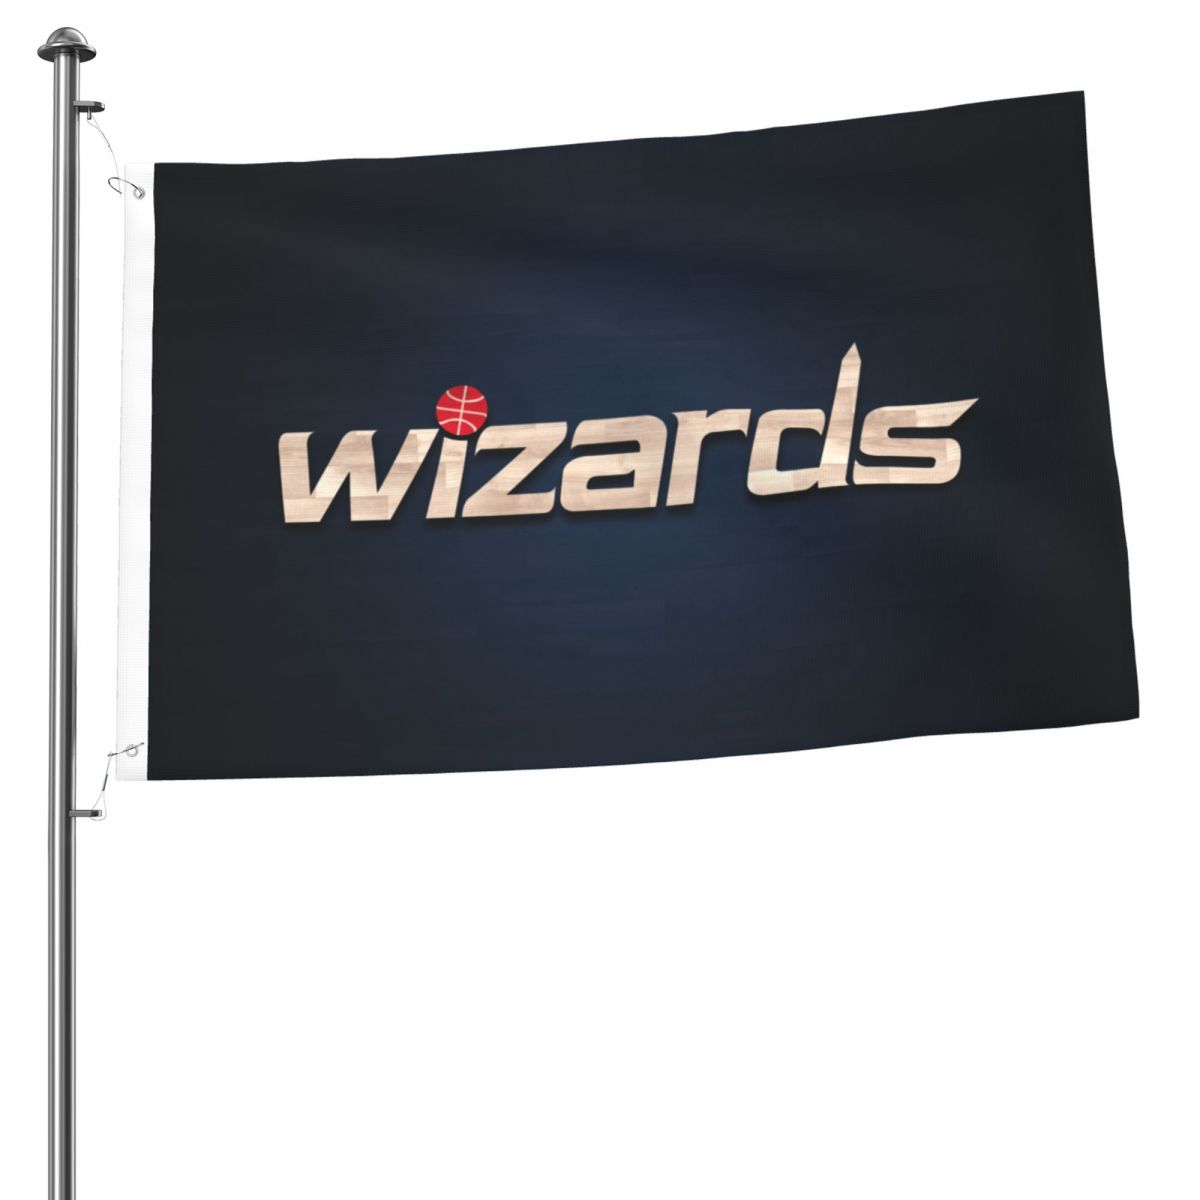 Washington Wizards 2x3 FT UV Resistant Flag